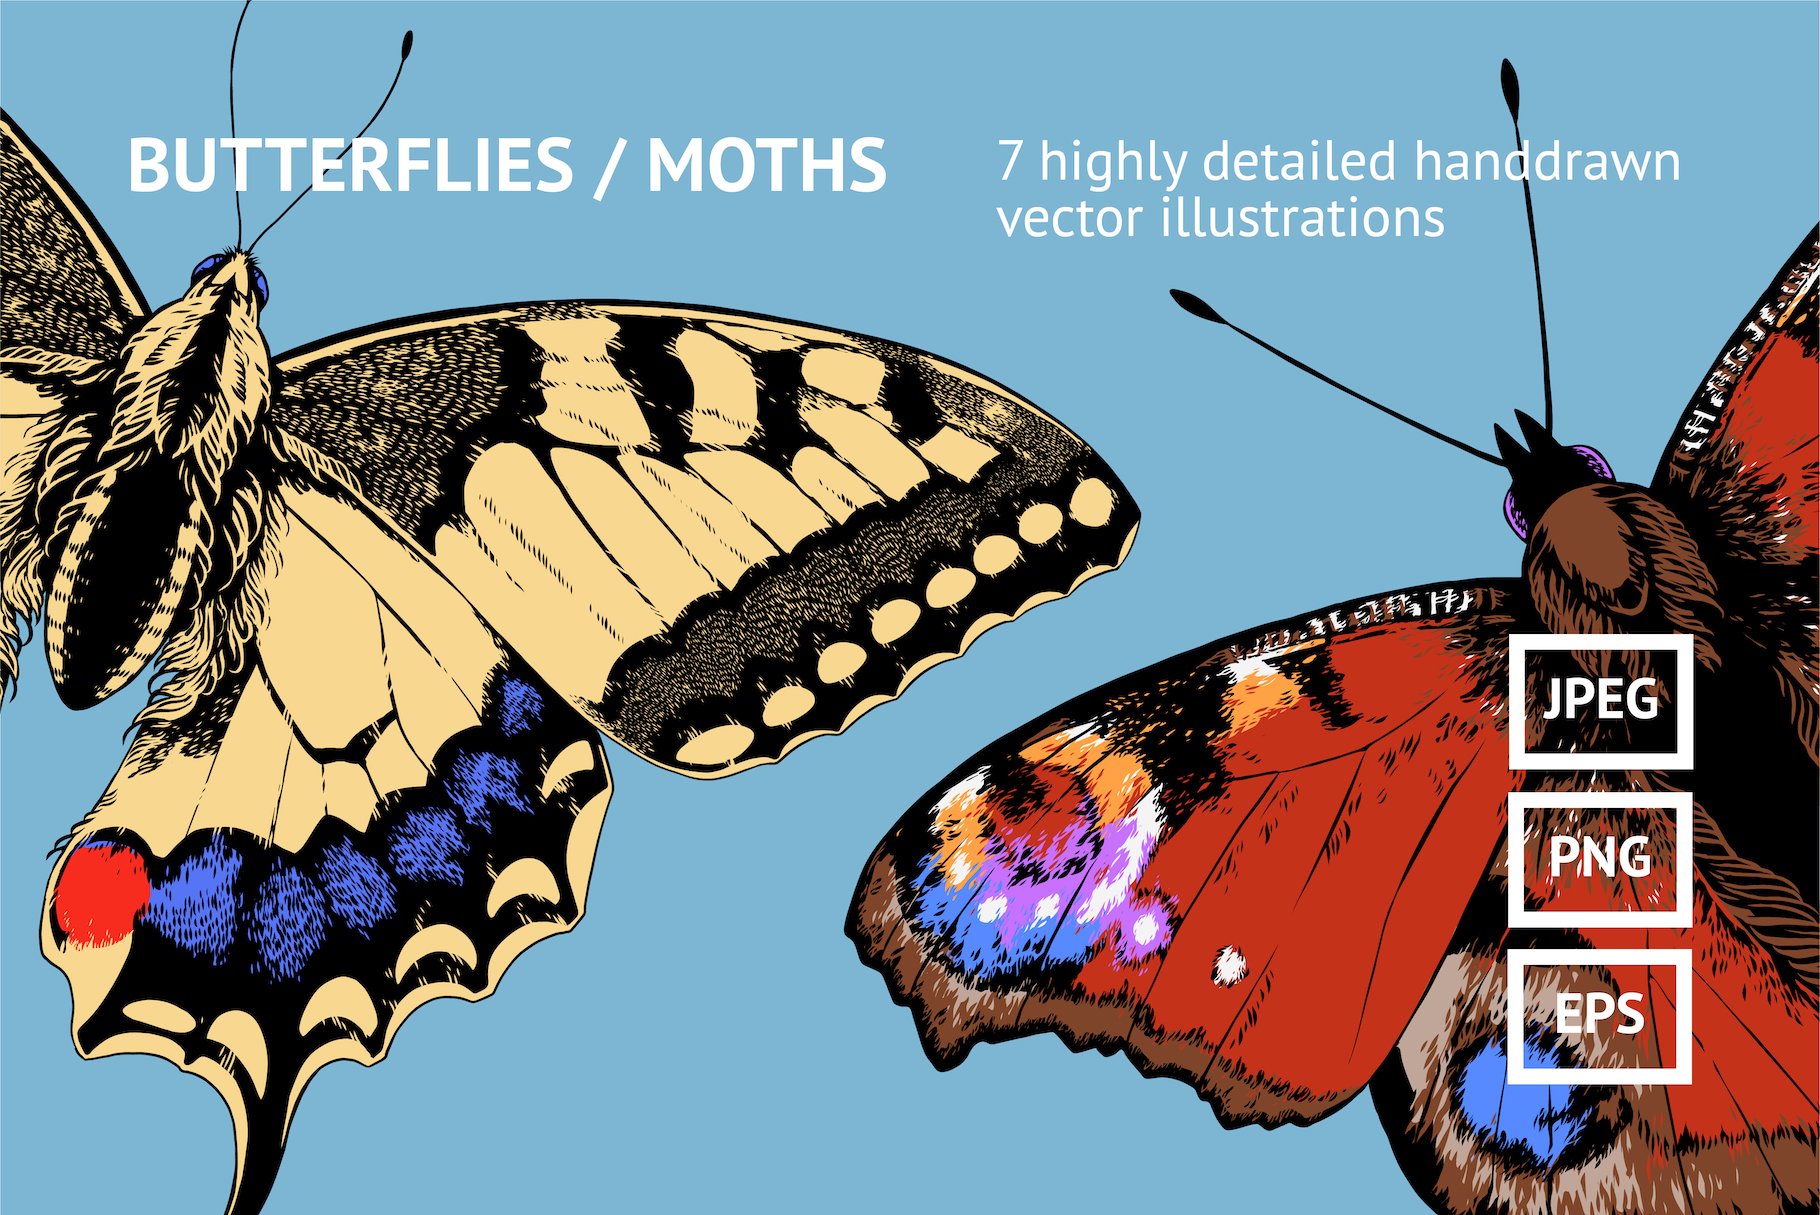 Butterflies / Moths cover image.